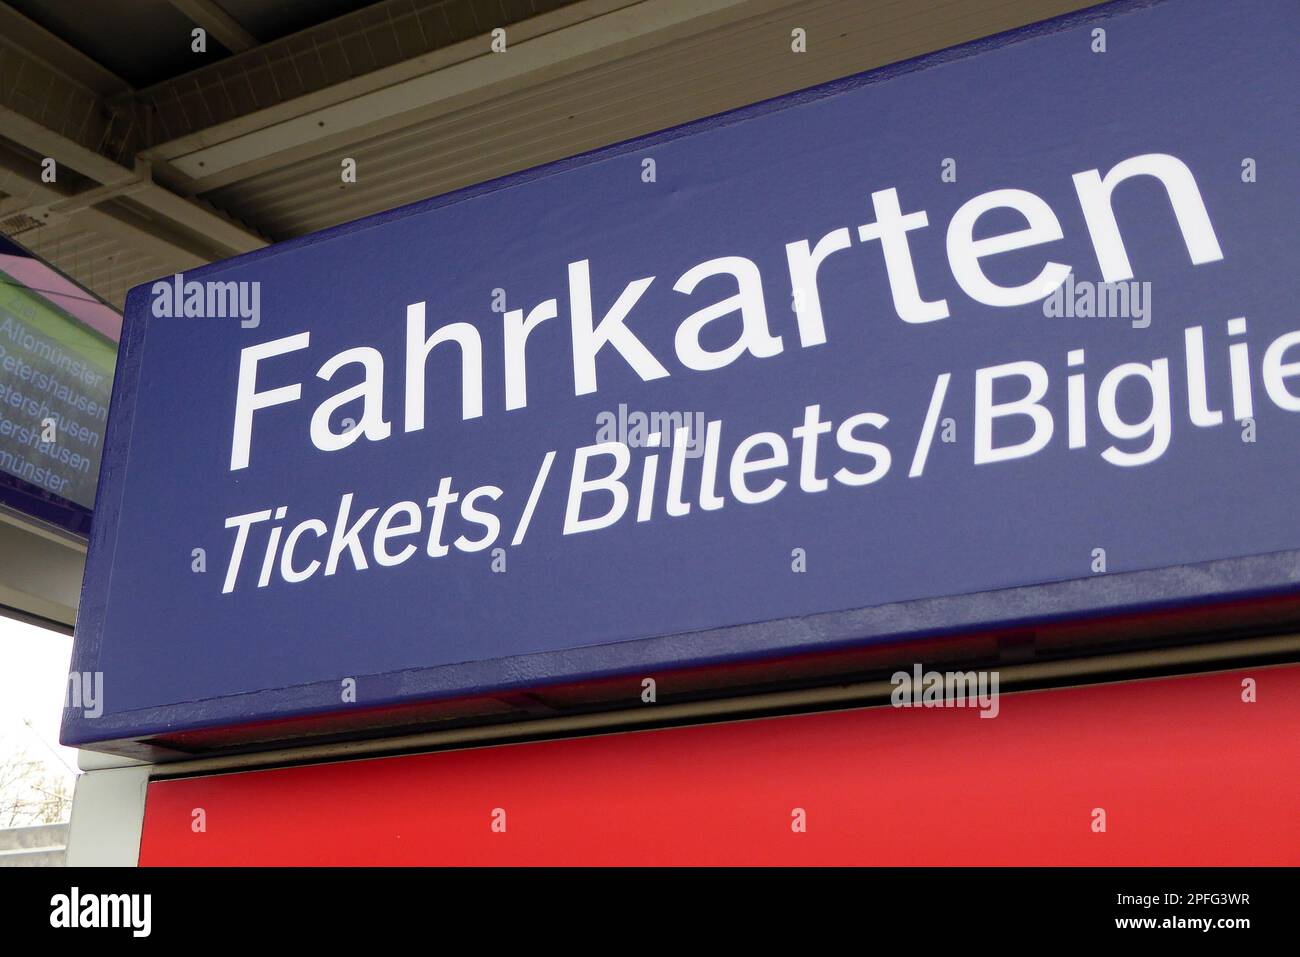 Fahrkartenautomat / DB / Fernverkehr /  Bahnhof / Information / Schild Stock Photo